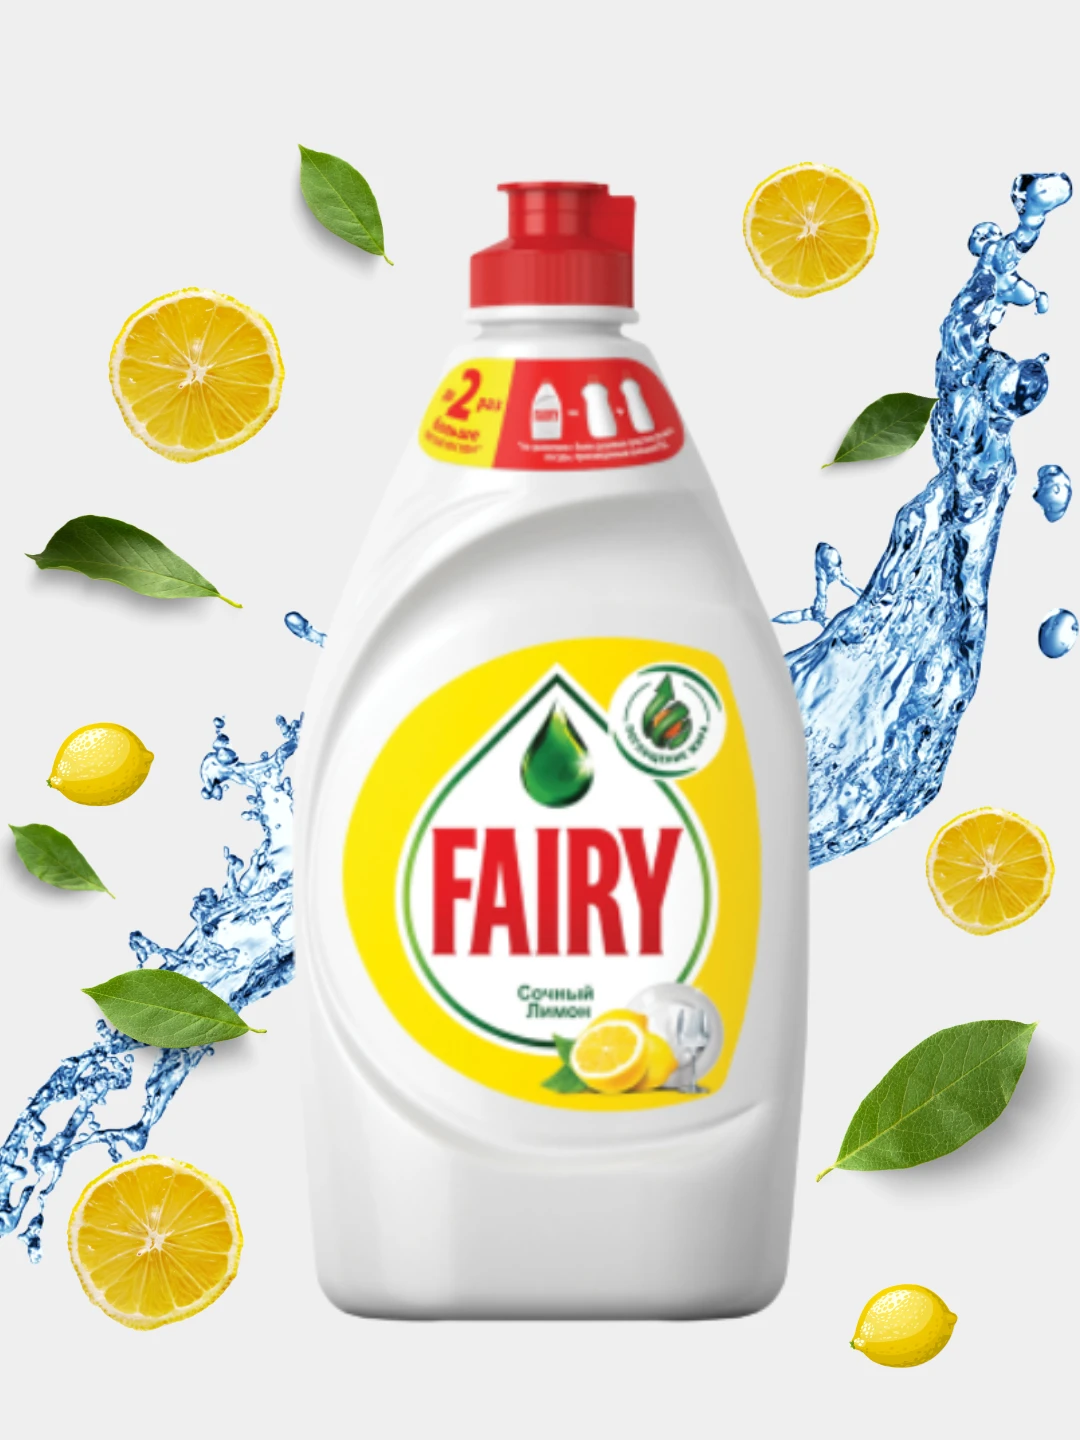 Fairy средство для мытья посуды лимон. Fairy сочный лимон 450 мл. Ср-во д/посуды "Фейри " лимон 450мл. Fairy жидкость для мытья посуды Lemon 450мл. Фейри 450 мл.